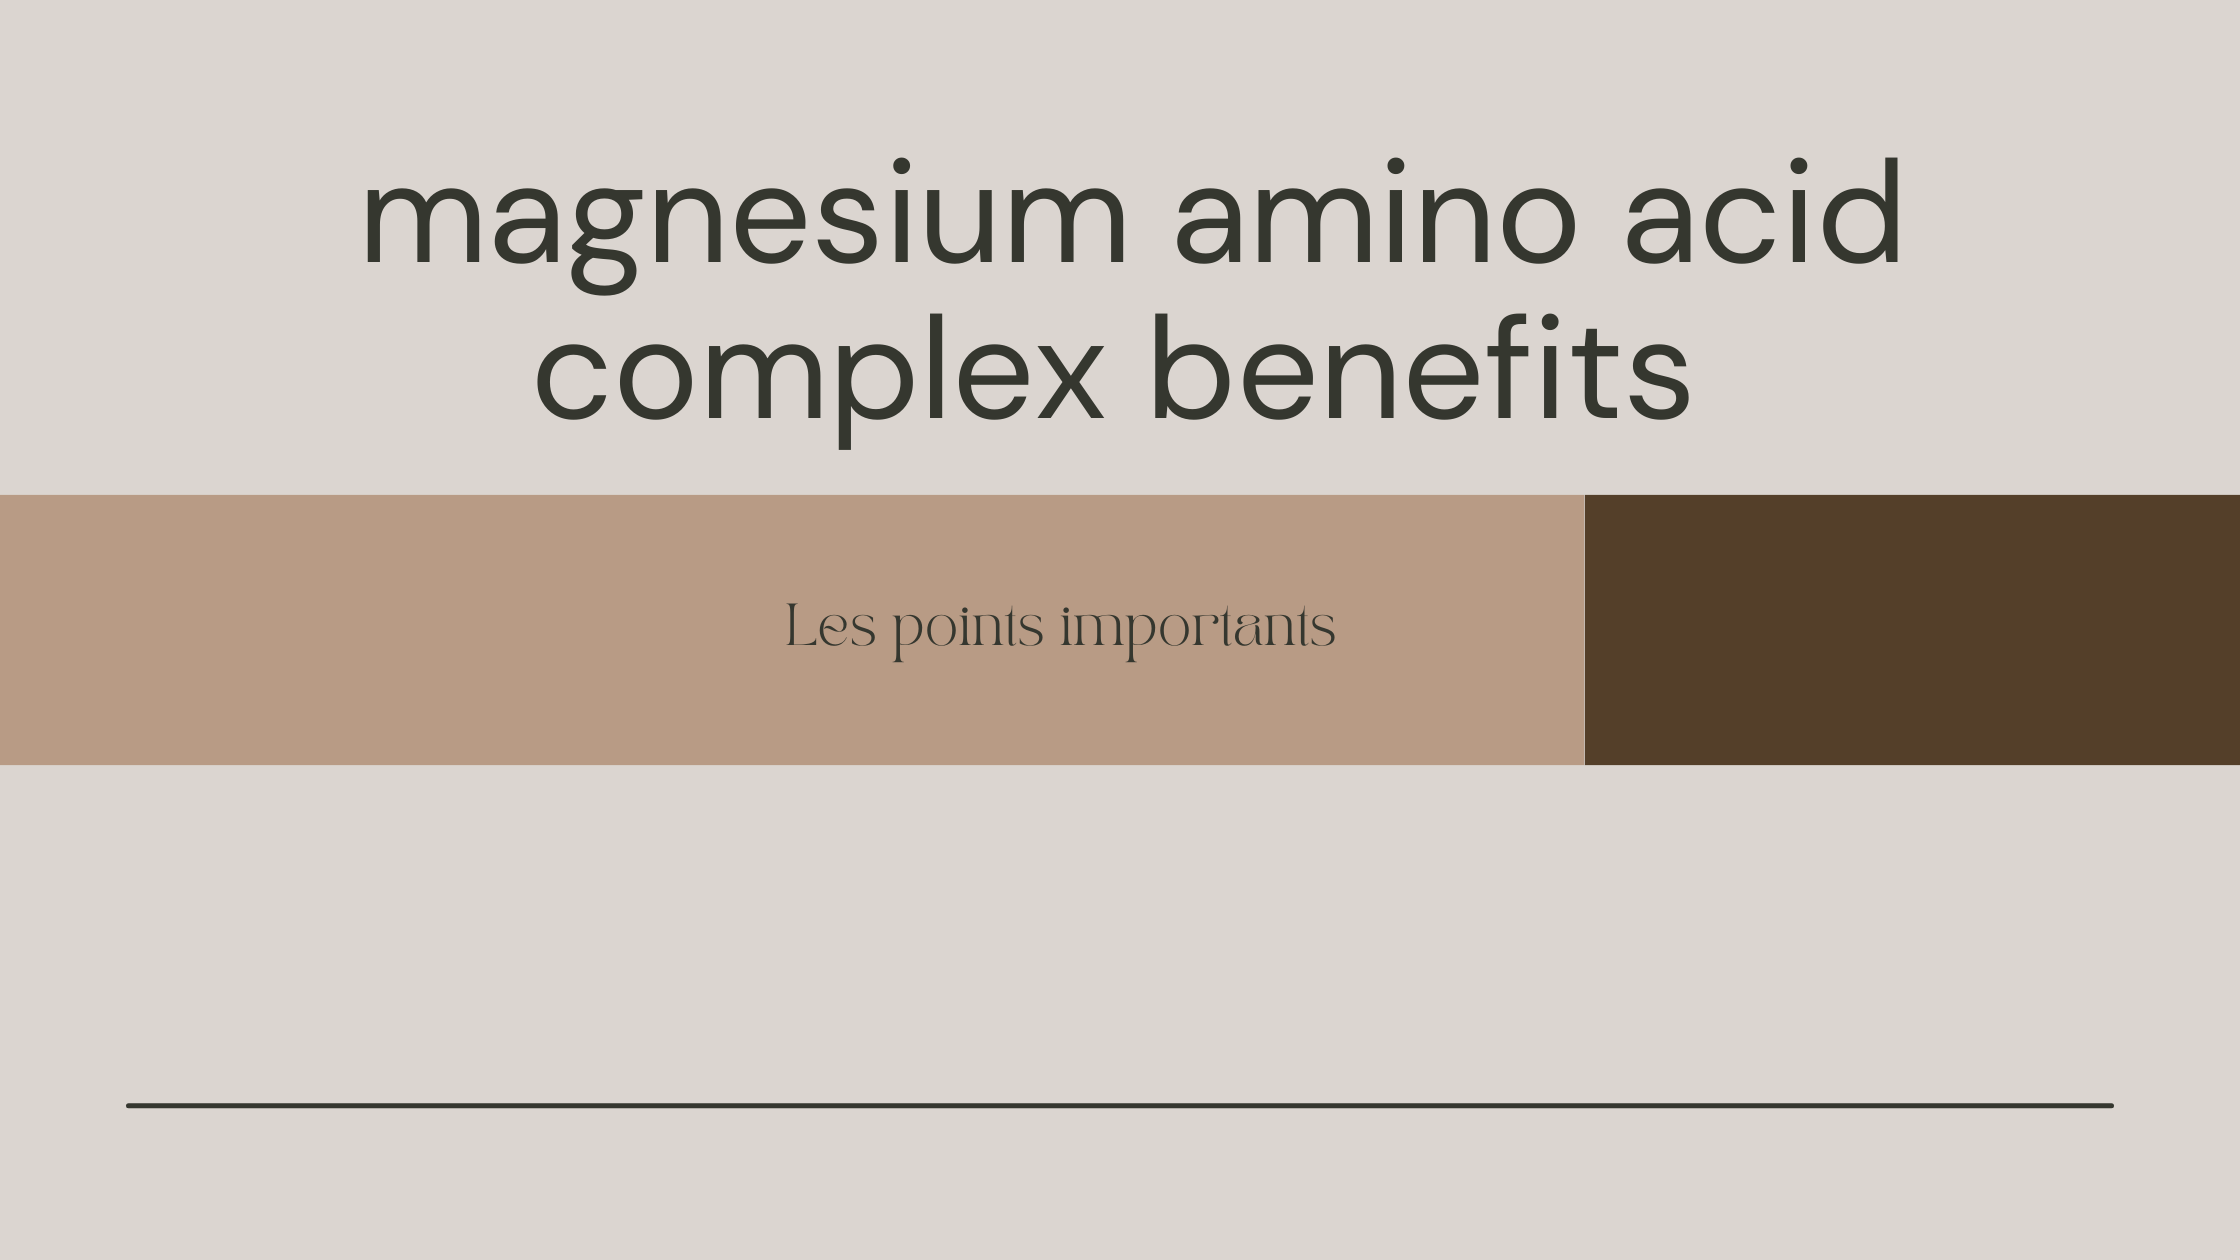 magnesium amino acid complex benefits | Les points importants